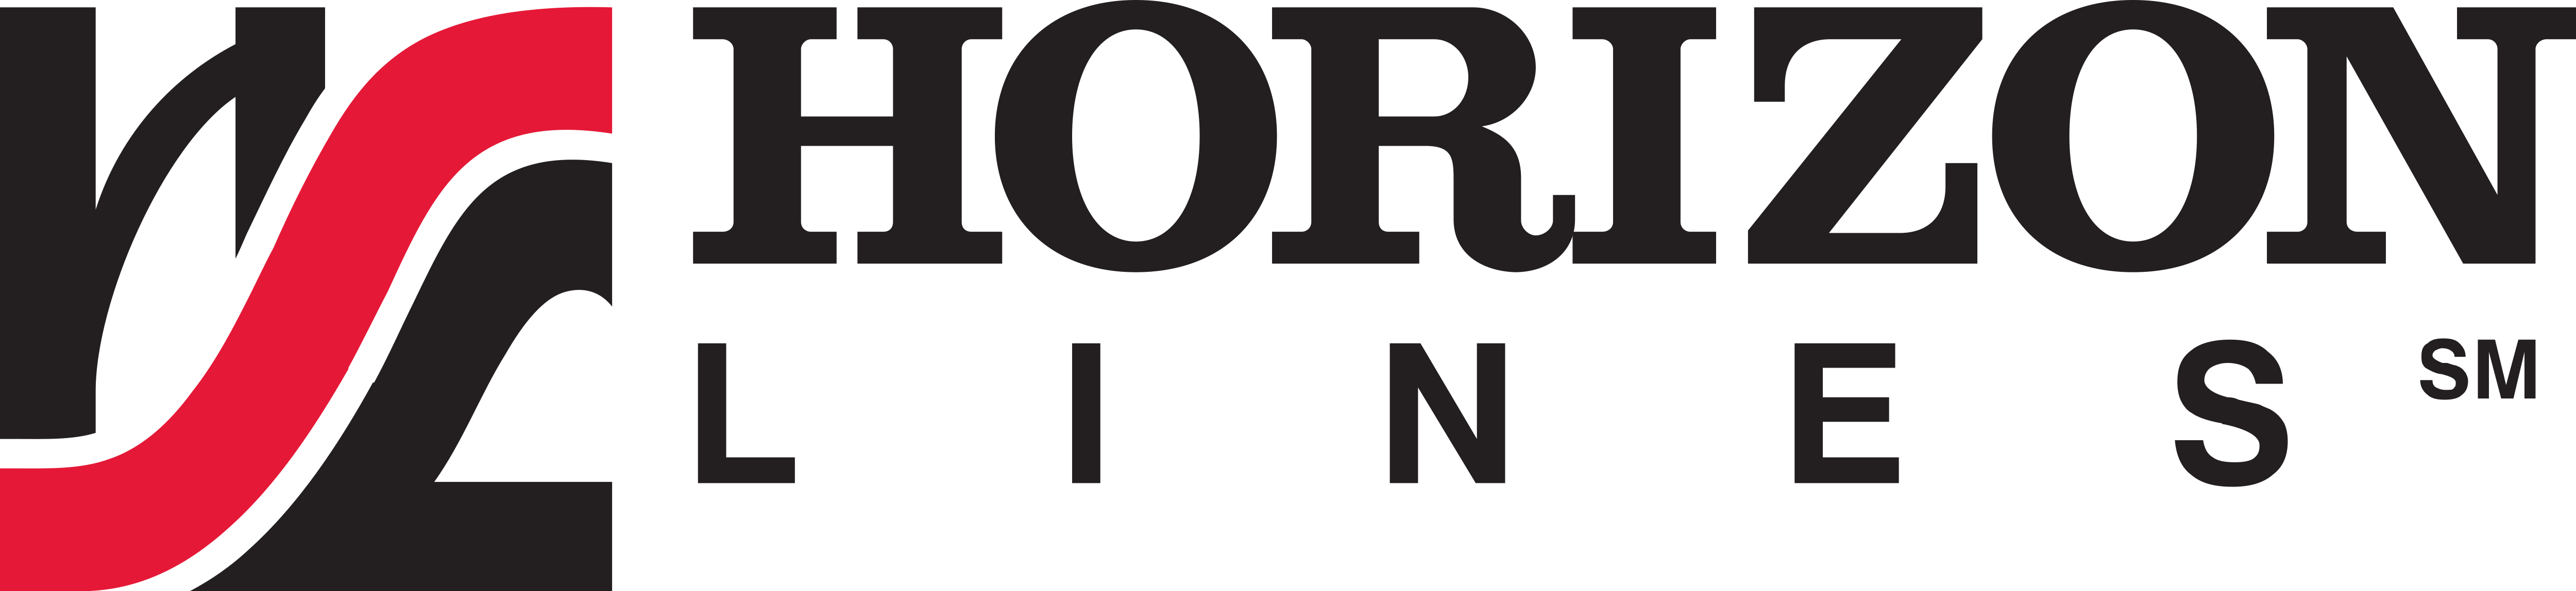 Forza Horizon 5 Logo Png - PNG Image Collection